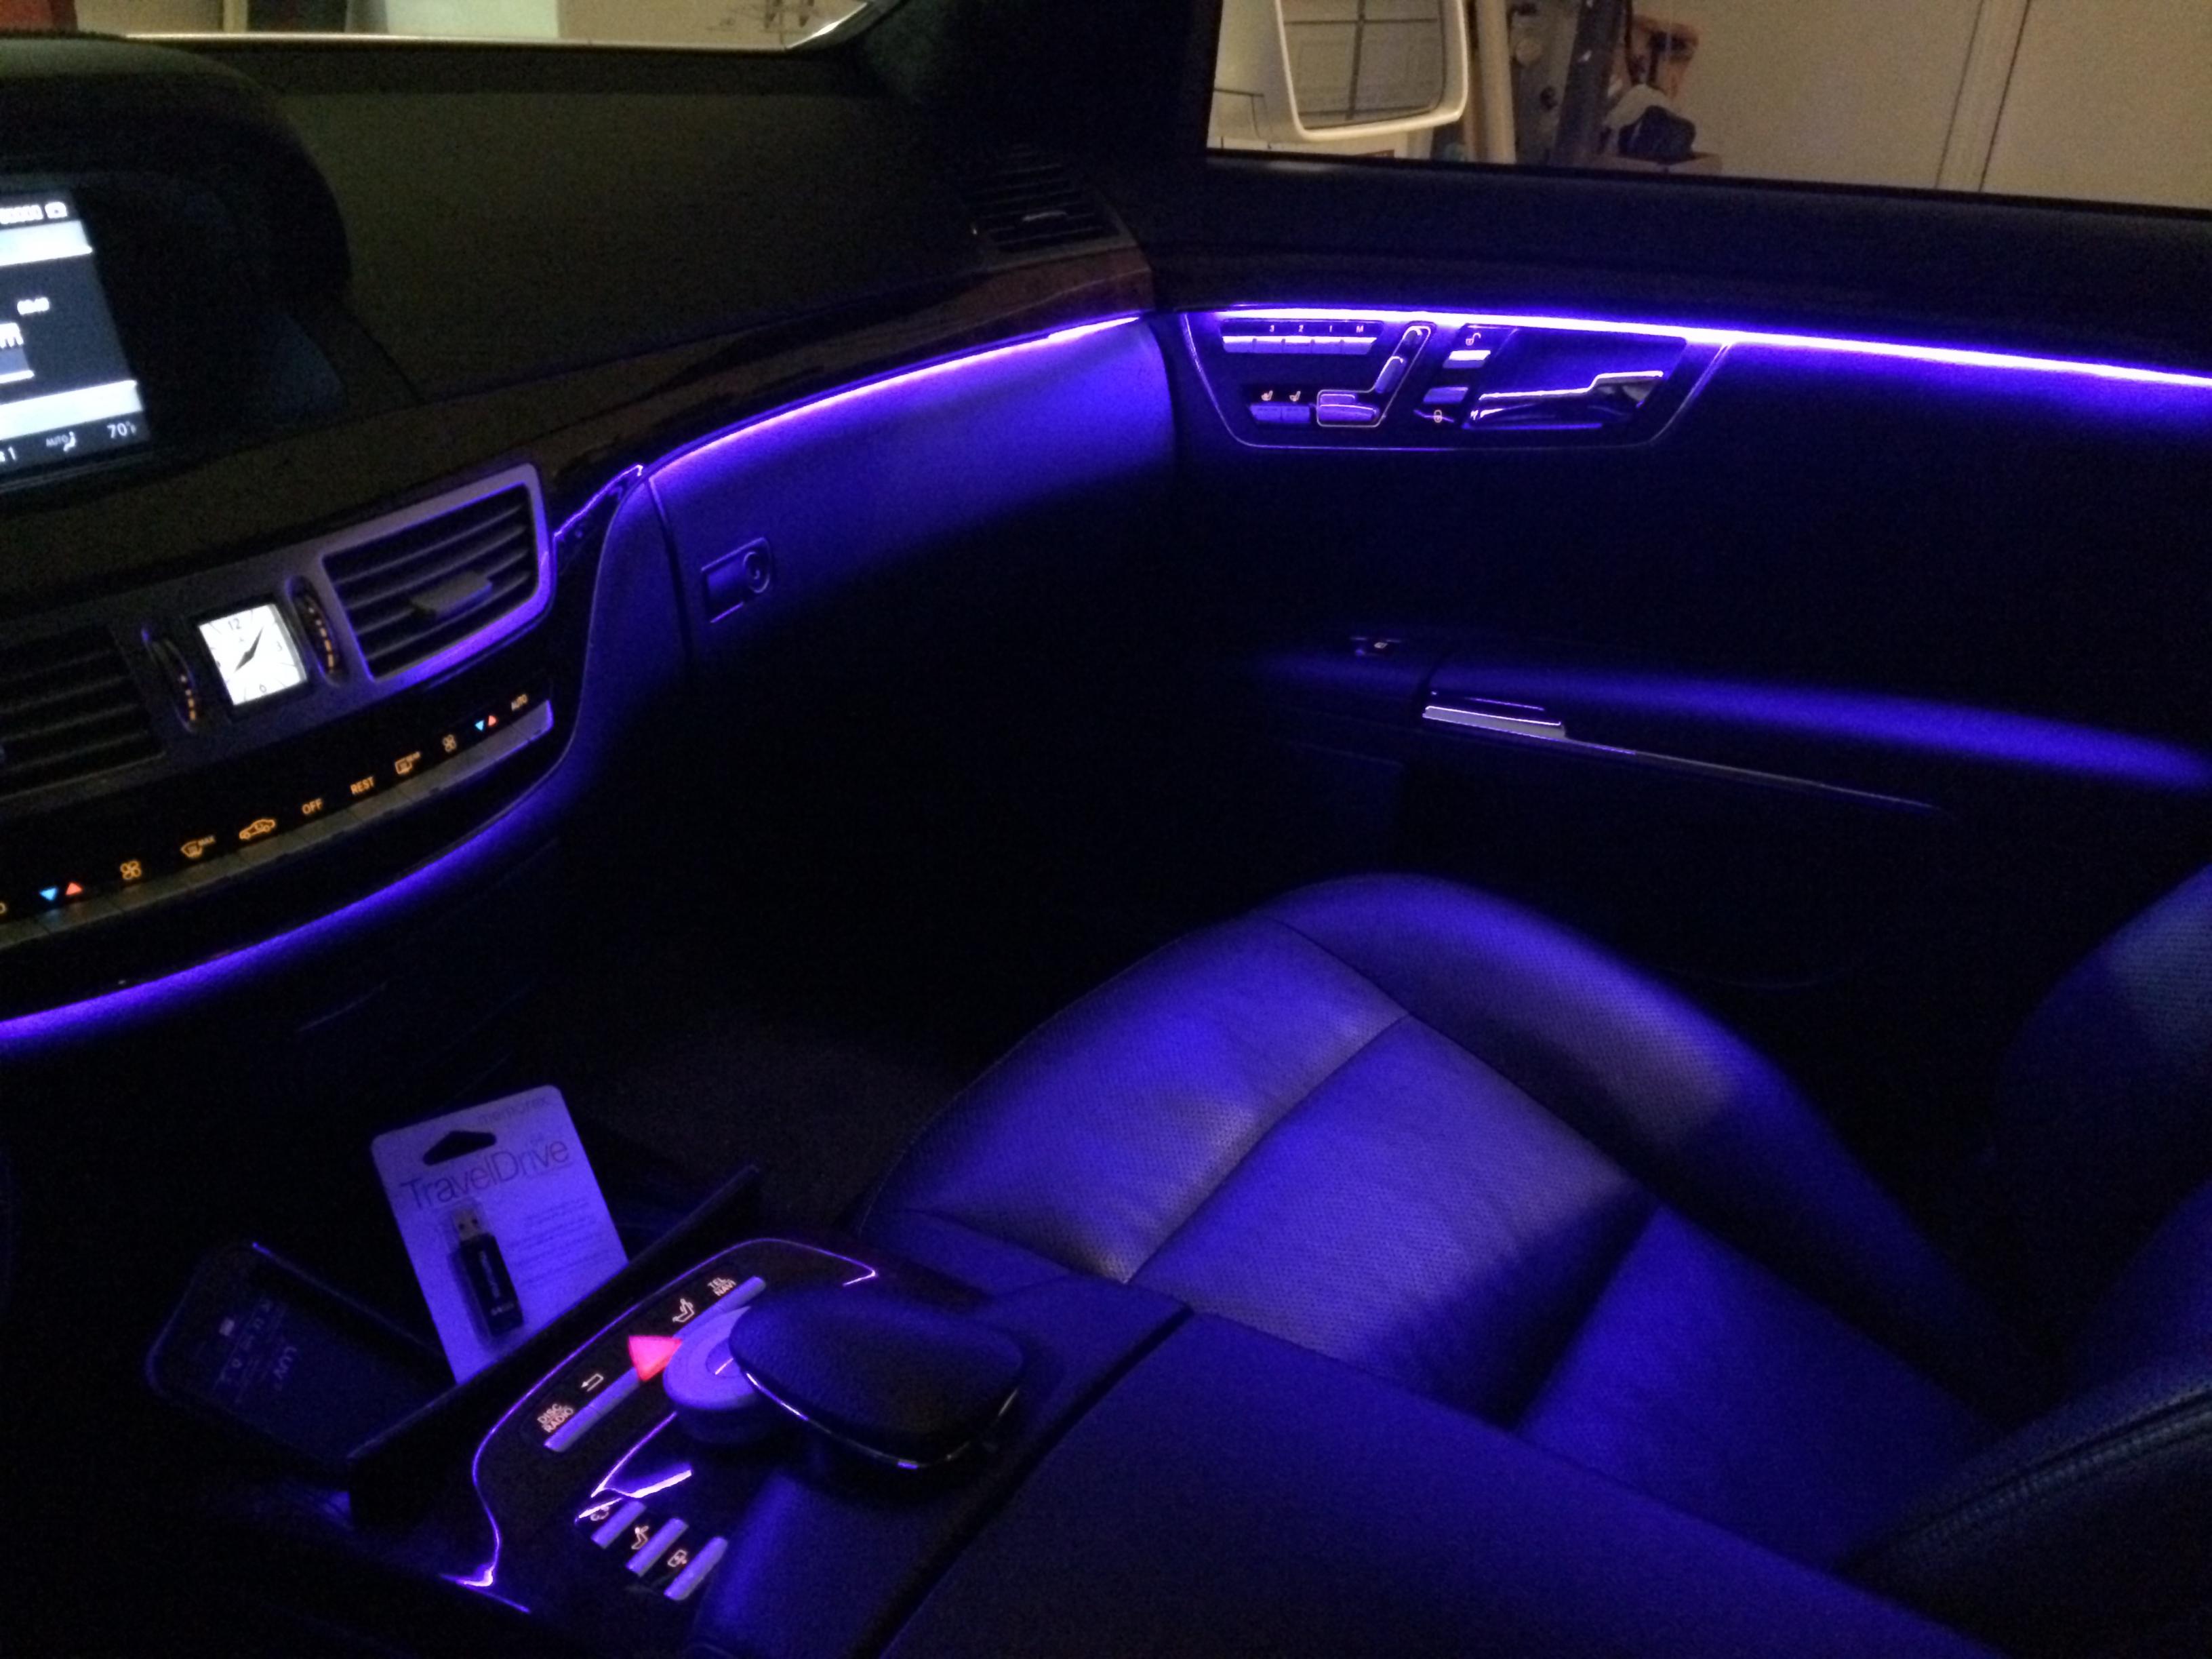 RGB LED Color-Changing Interior Dash Trim Ambient Lighting Kit